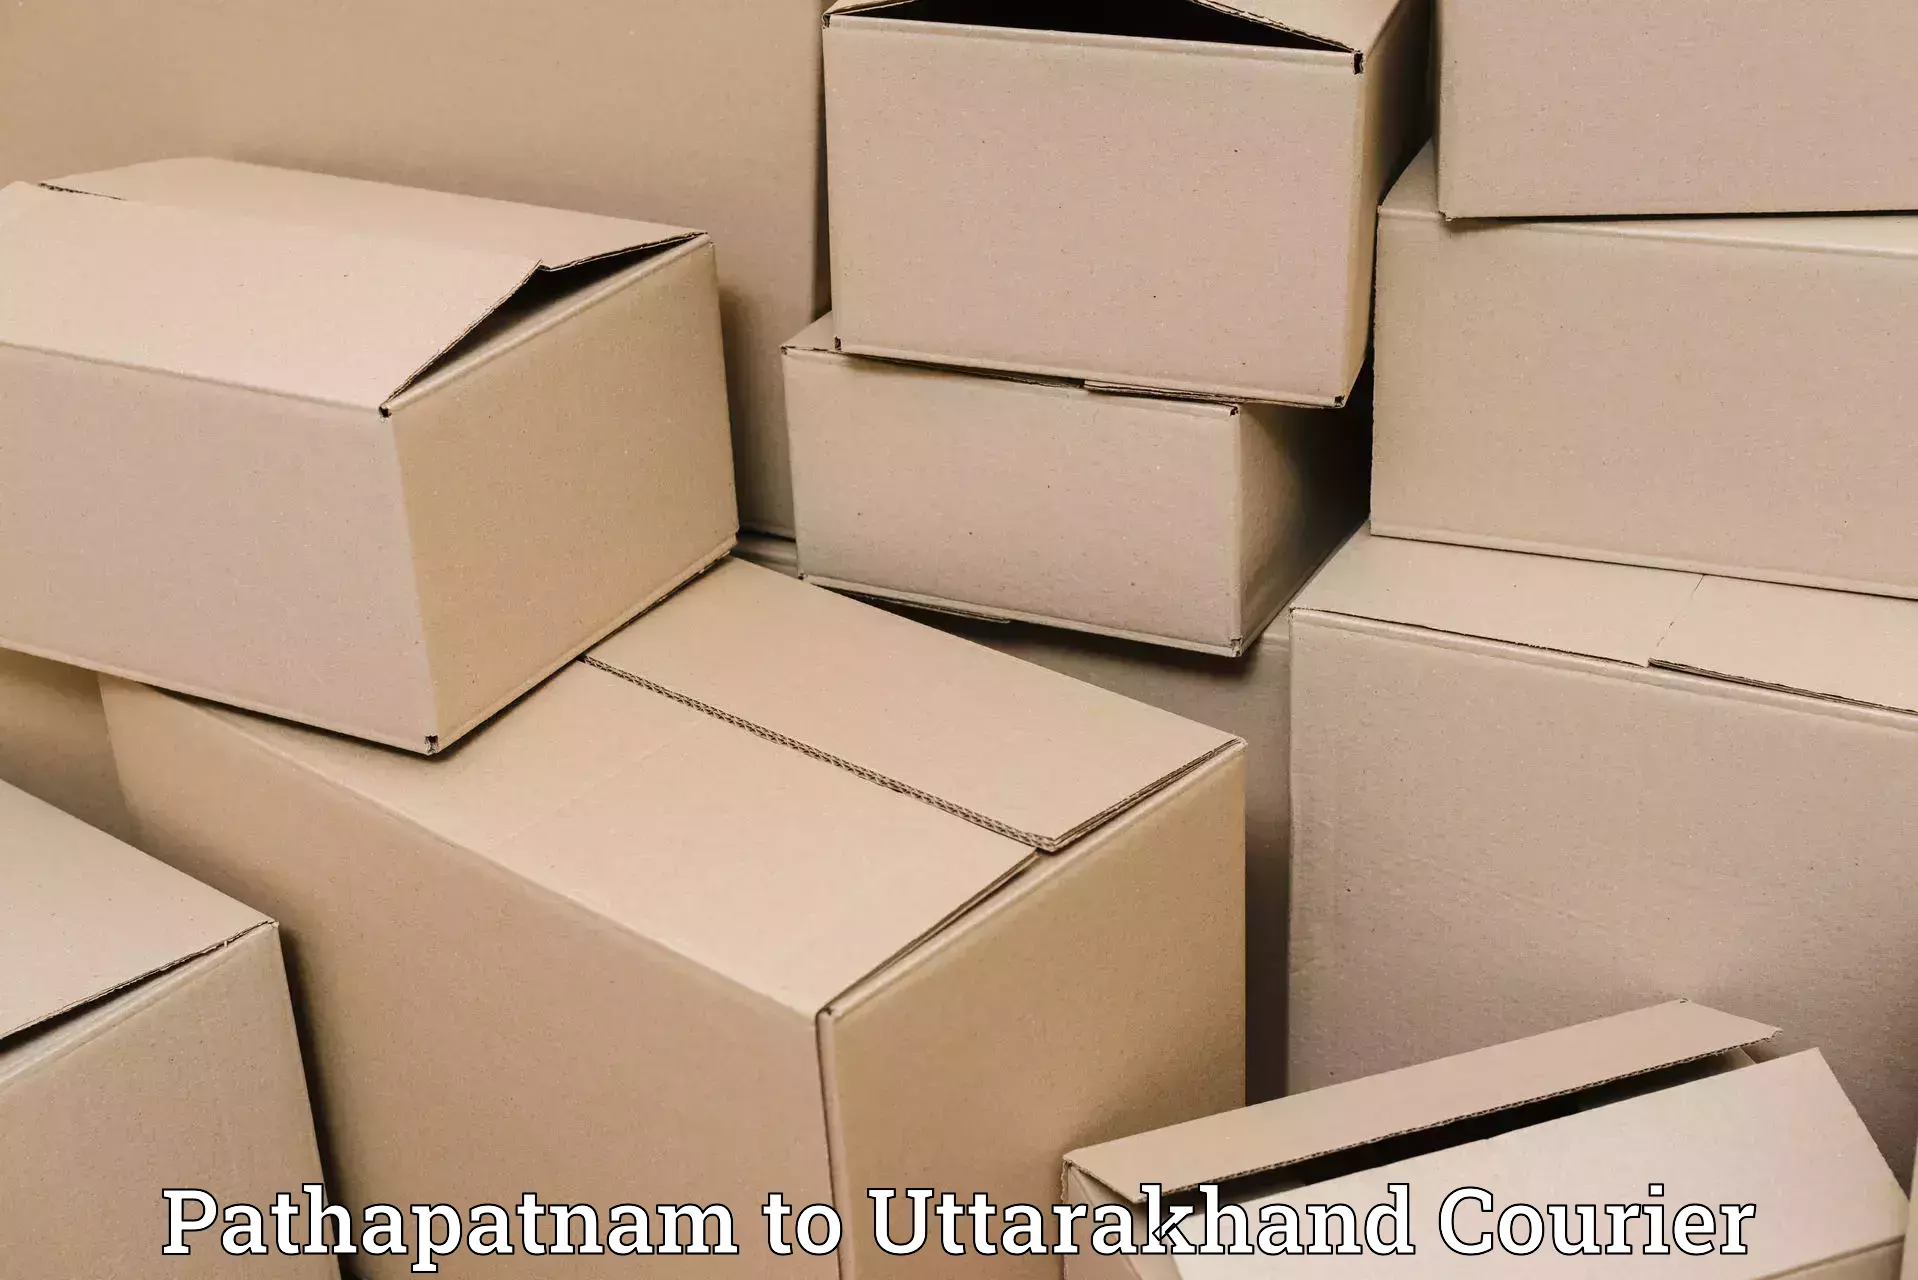 Affordable international shipping Pathapatnam to Rishikesh